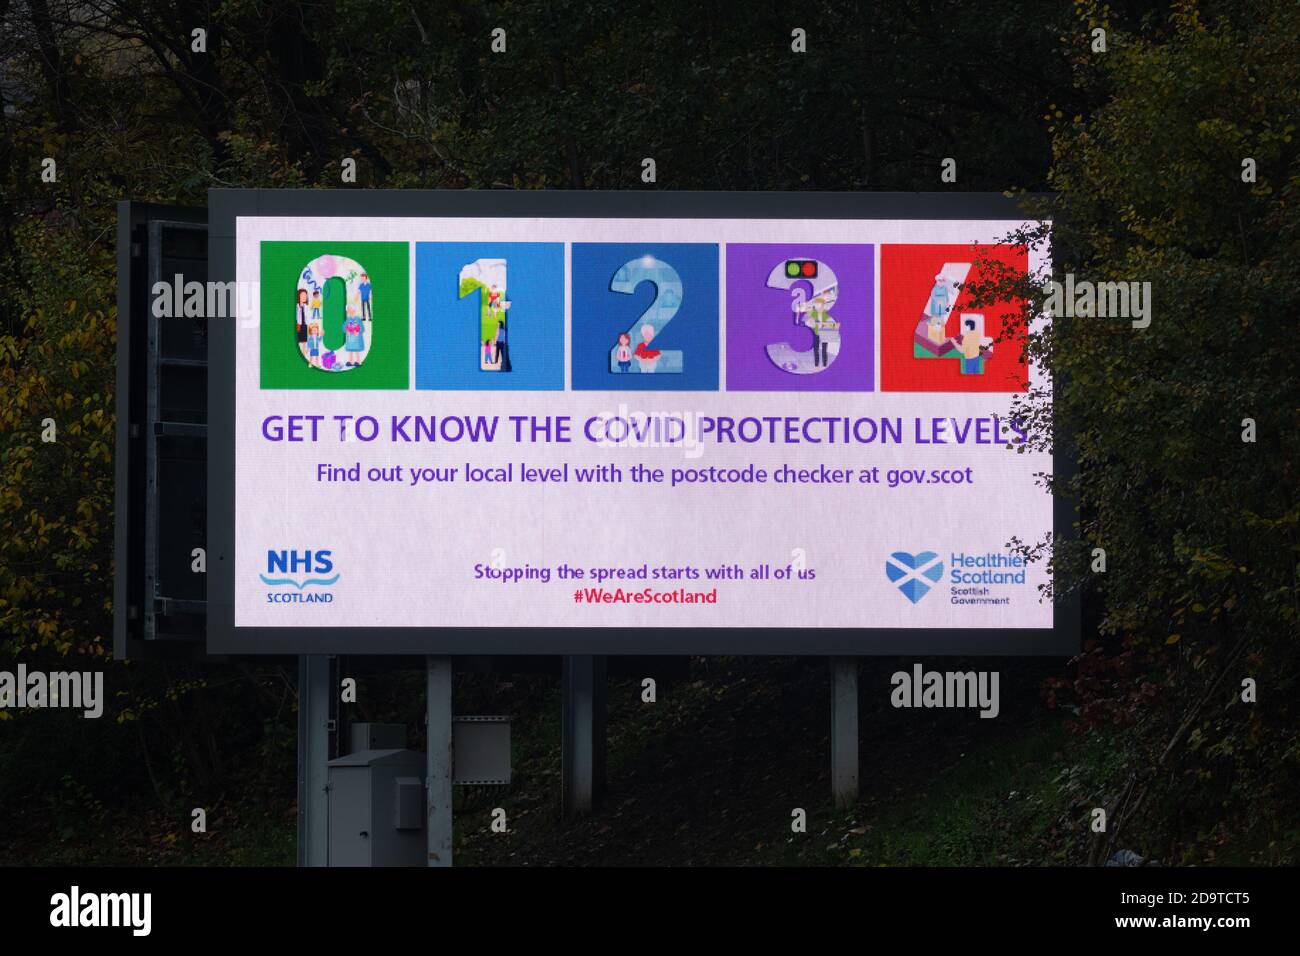 El sistema de niveles o niveles de bloqueo de 5 niveles de Escocia que entró en vigor el 2 de noviembre de 2020 - cartel iluminado - Glasgow, Escocia, Reino Unido Foto de stock